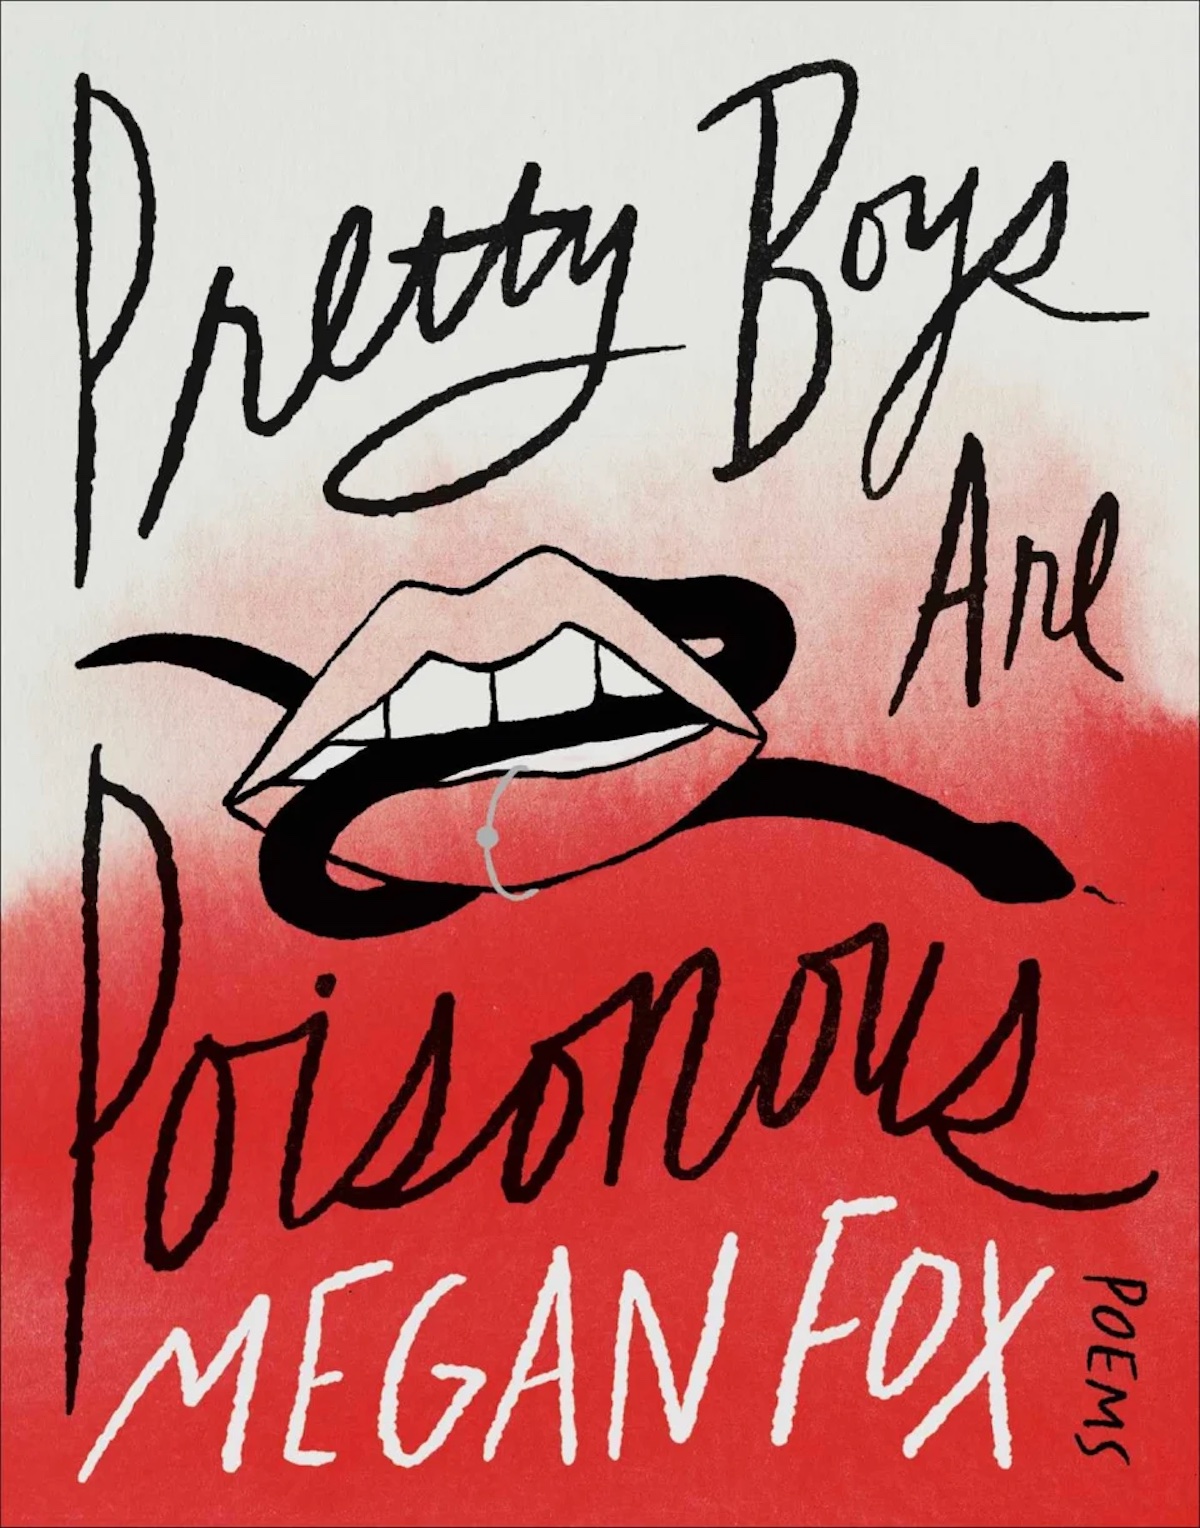 Megan Fox’s Poetry Book